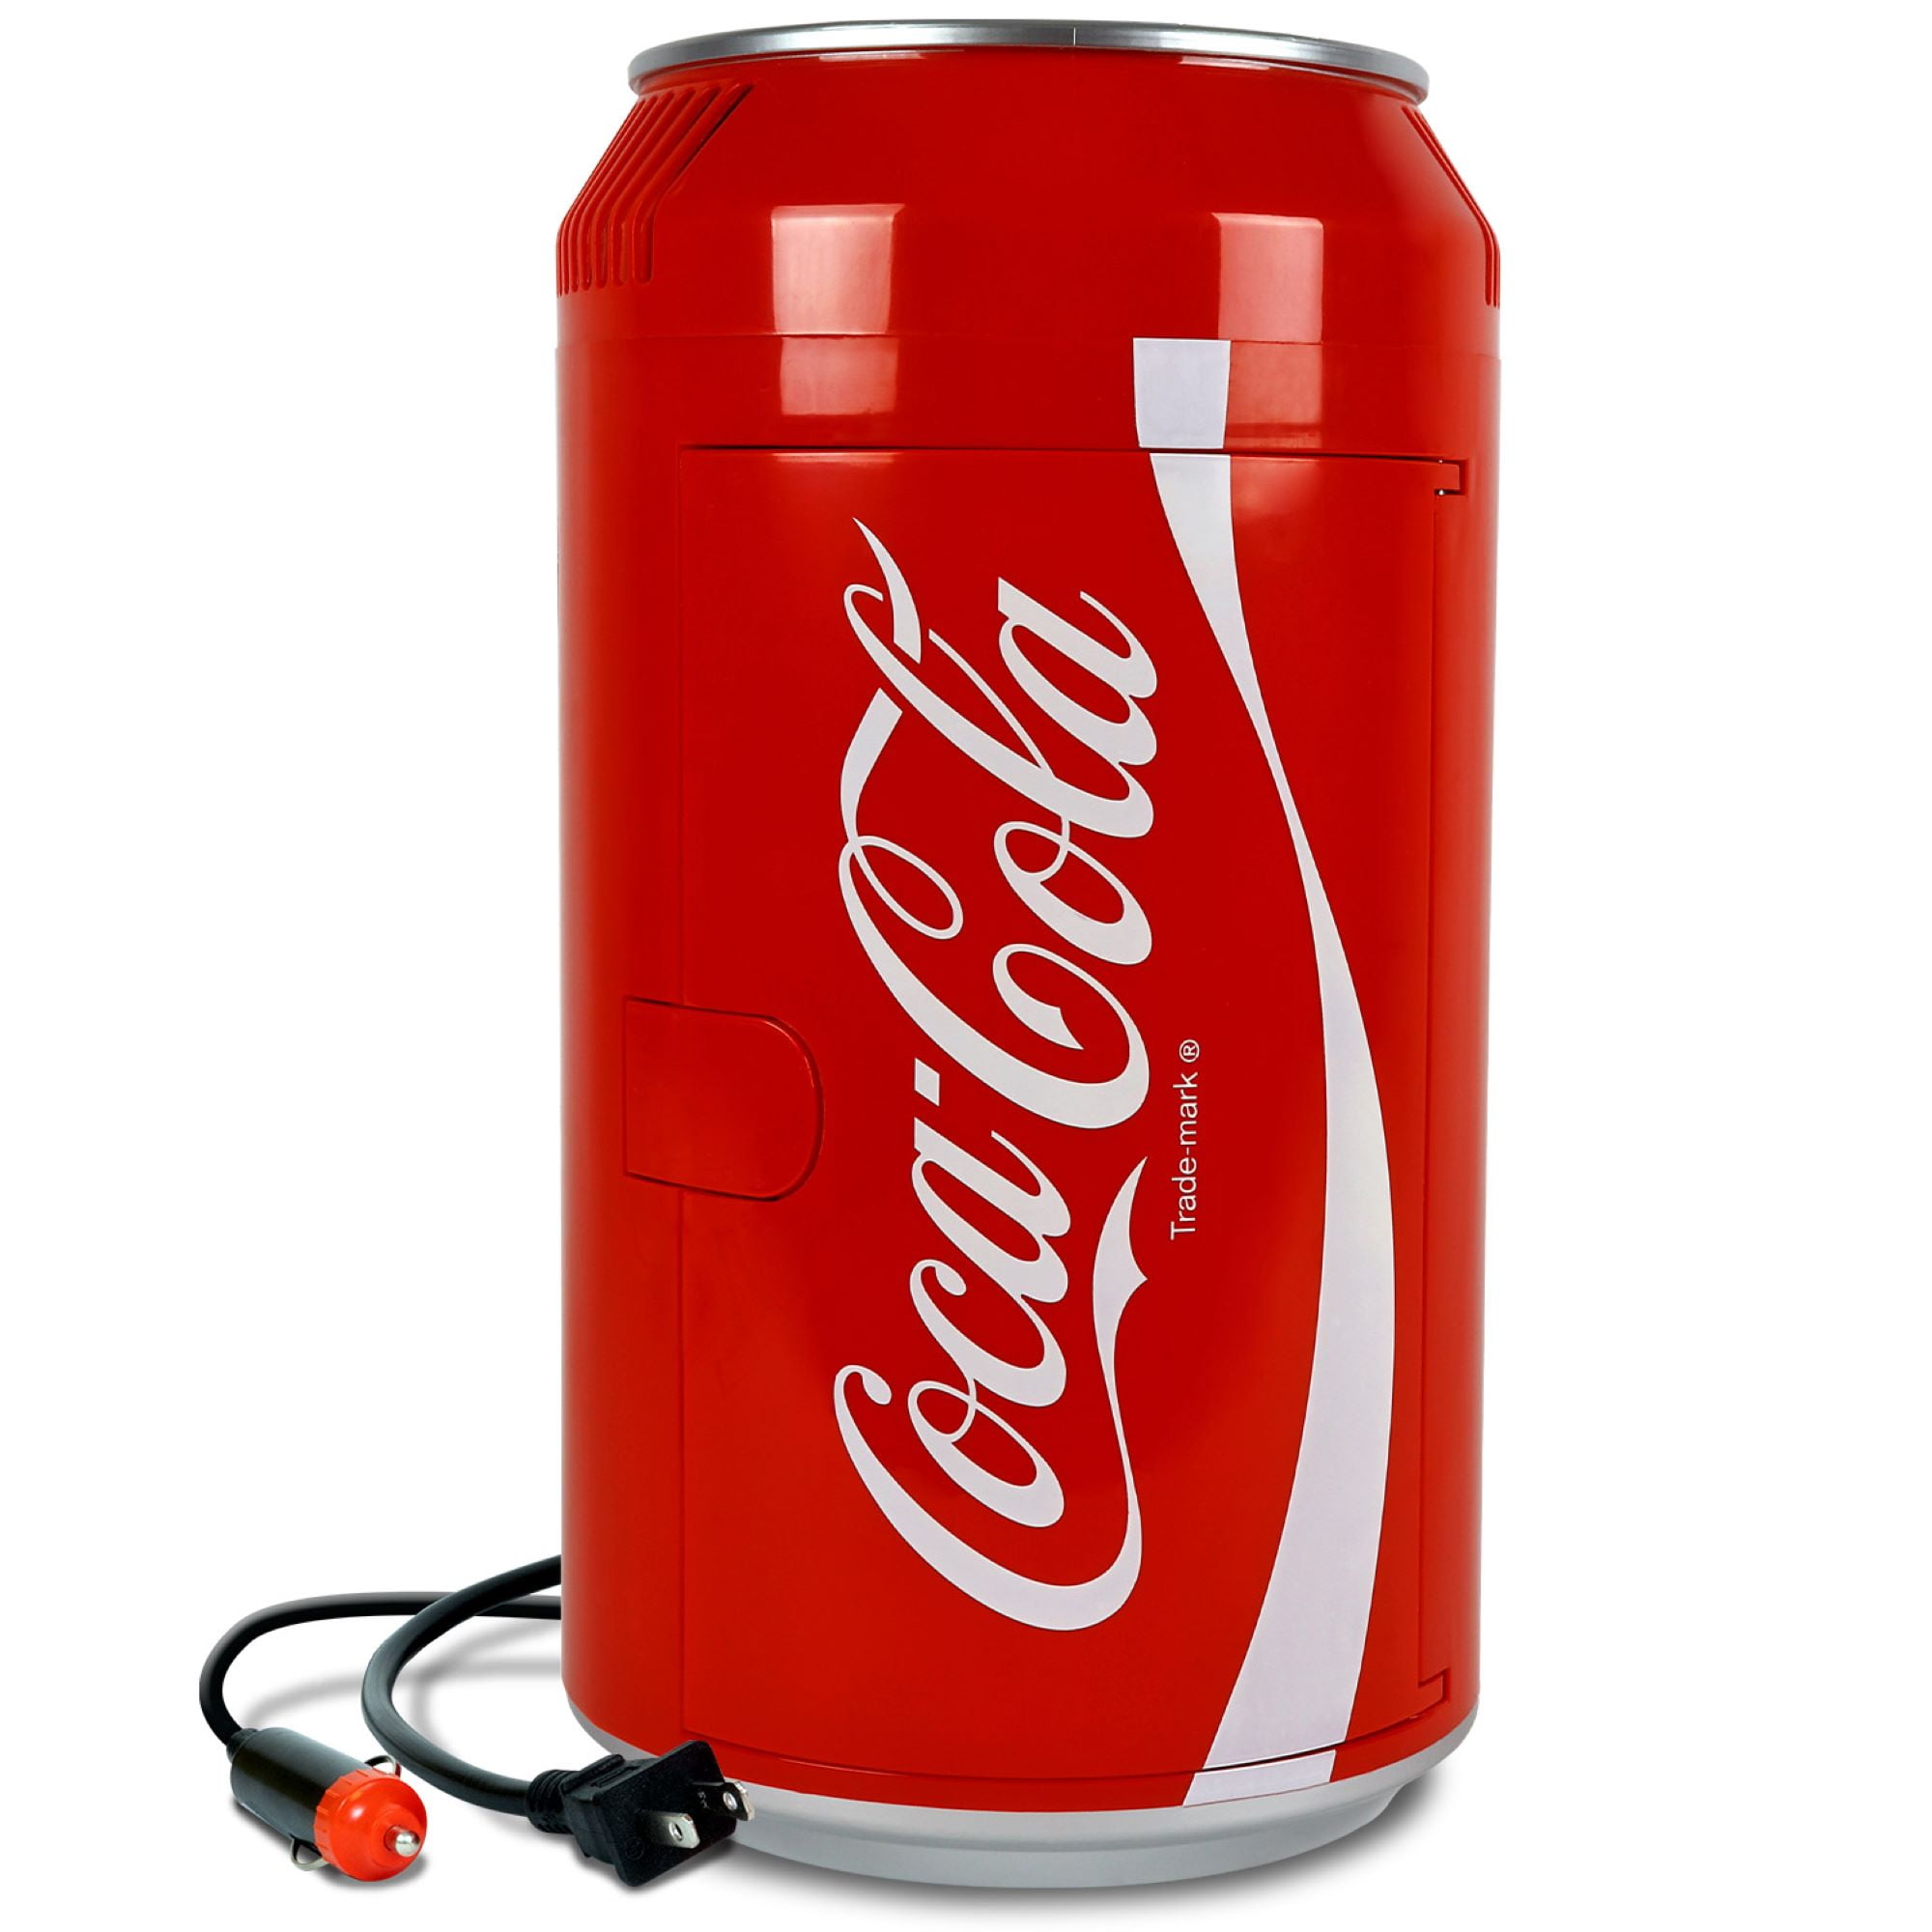 Coca Cola Electric Cooler